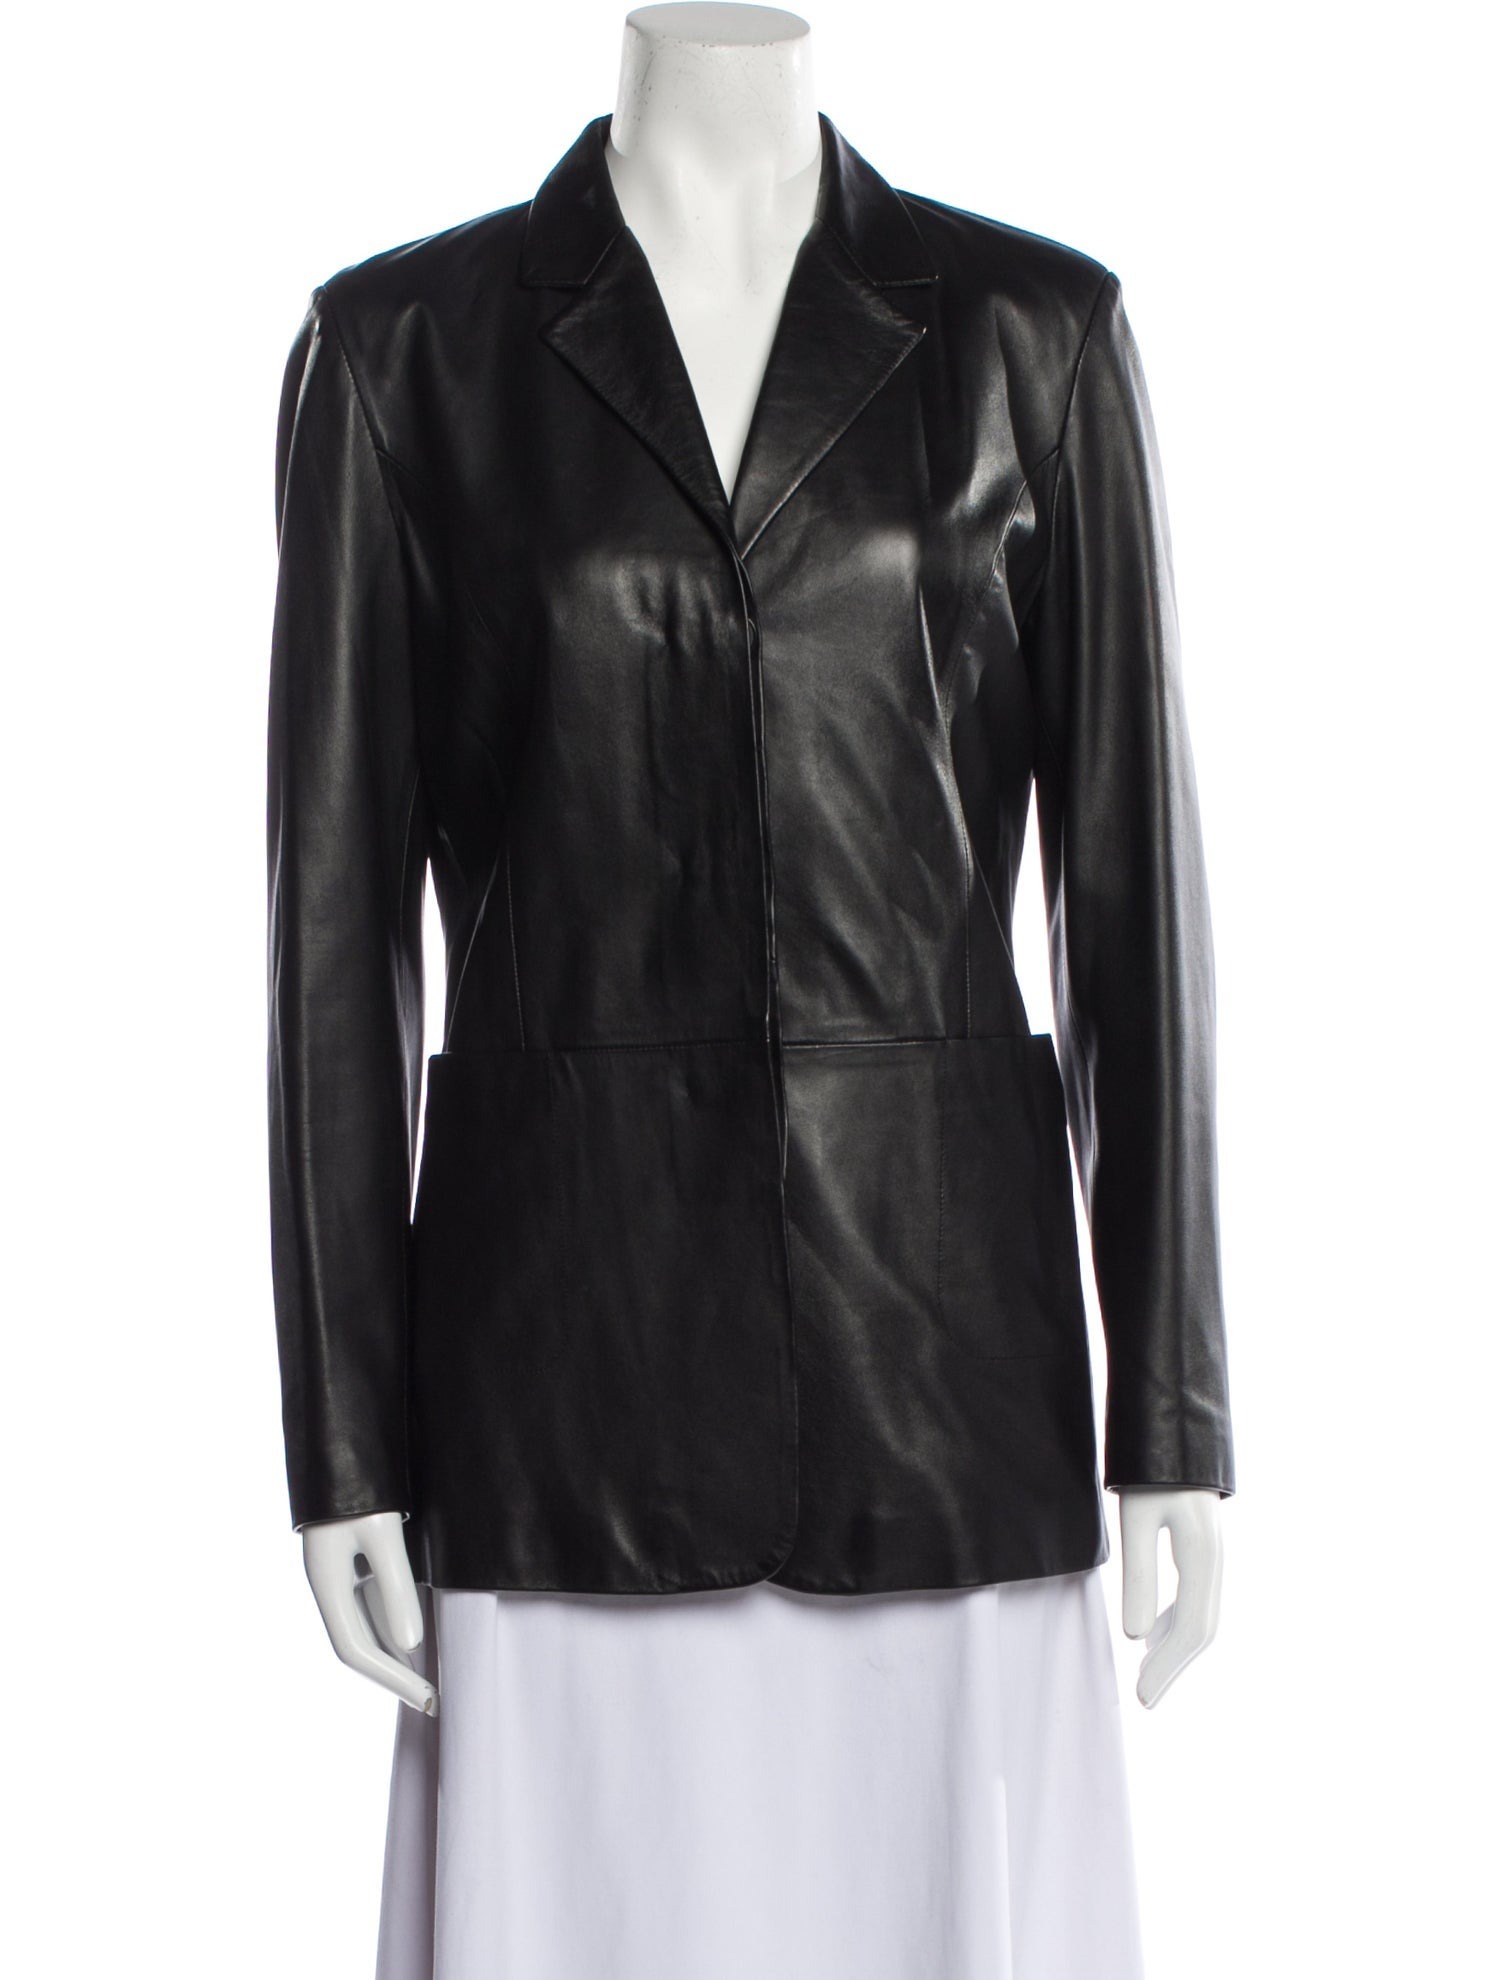 Black leather Bally blazer